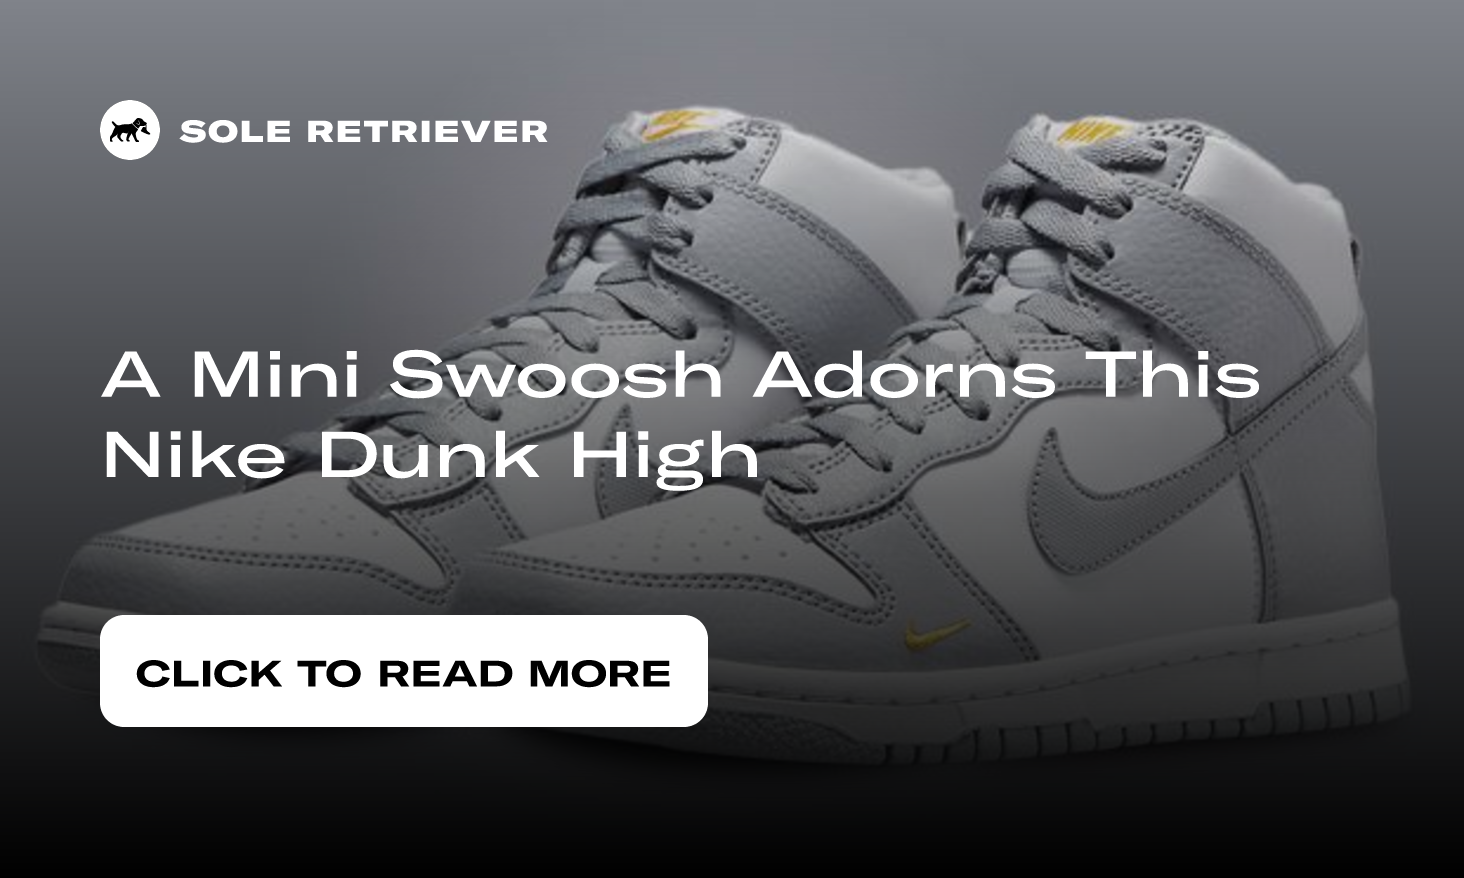 A Mini Swoosh Adorns This Nike Dunk High